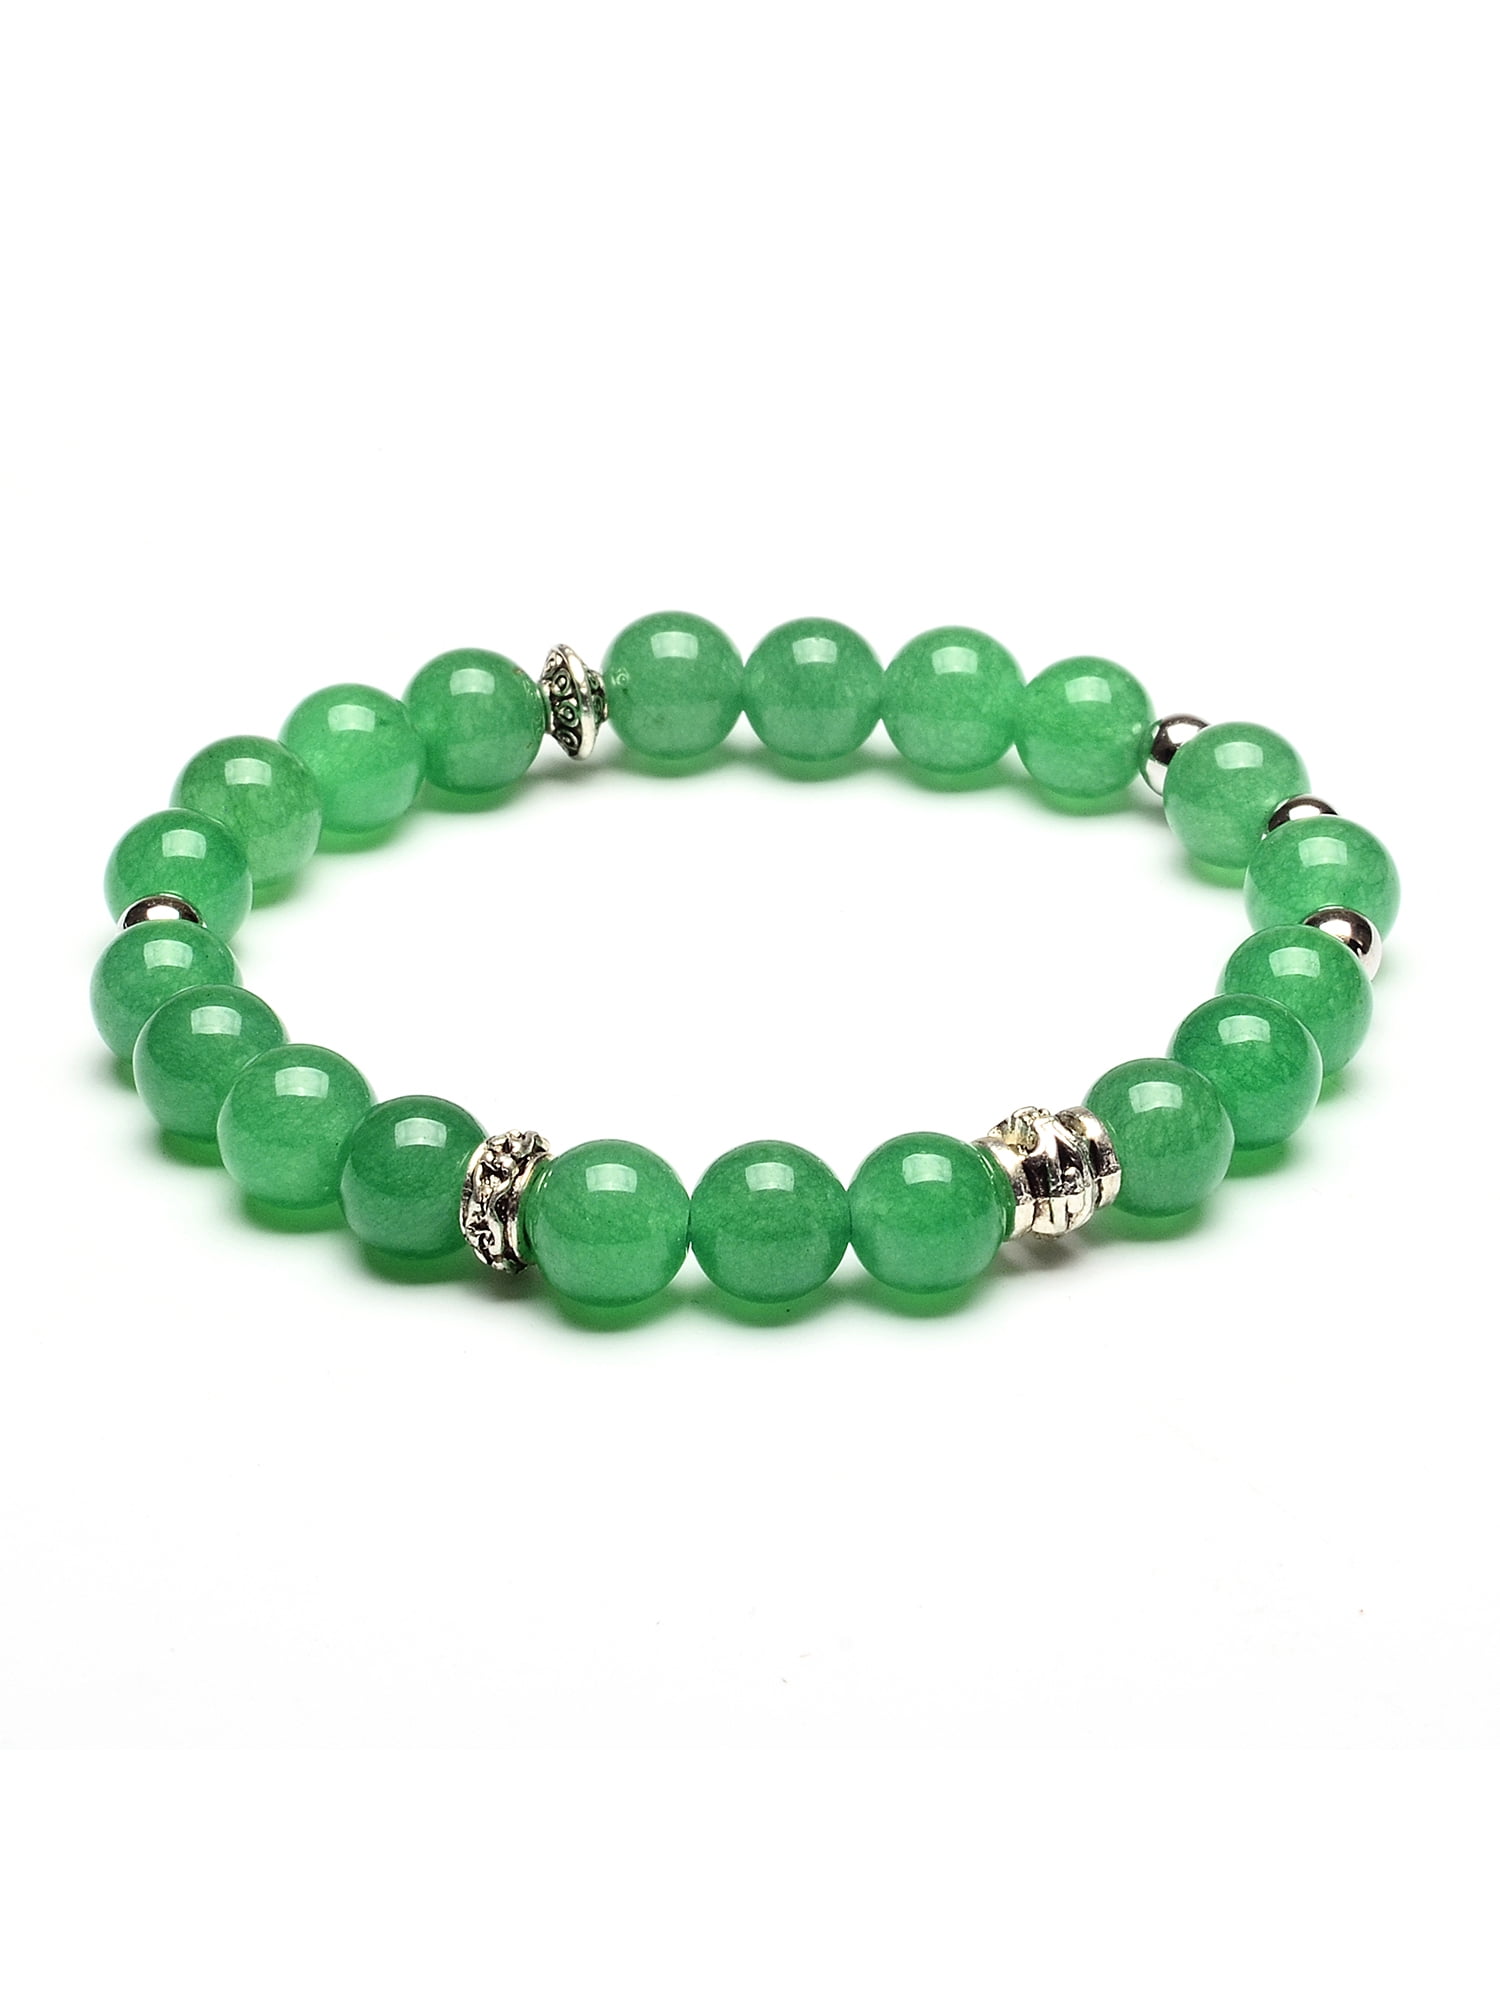 Natural Jadeite Green HEAVY BIG 18mm Ball Bead Stretch JADE Bracelet*LG/Free Box 